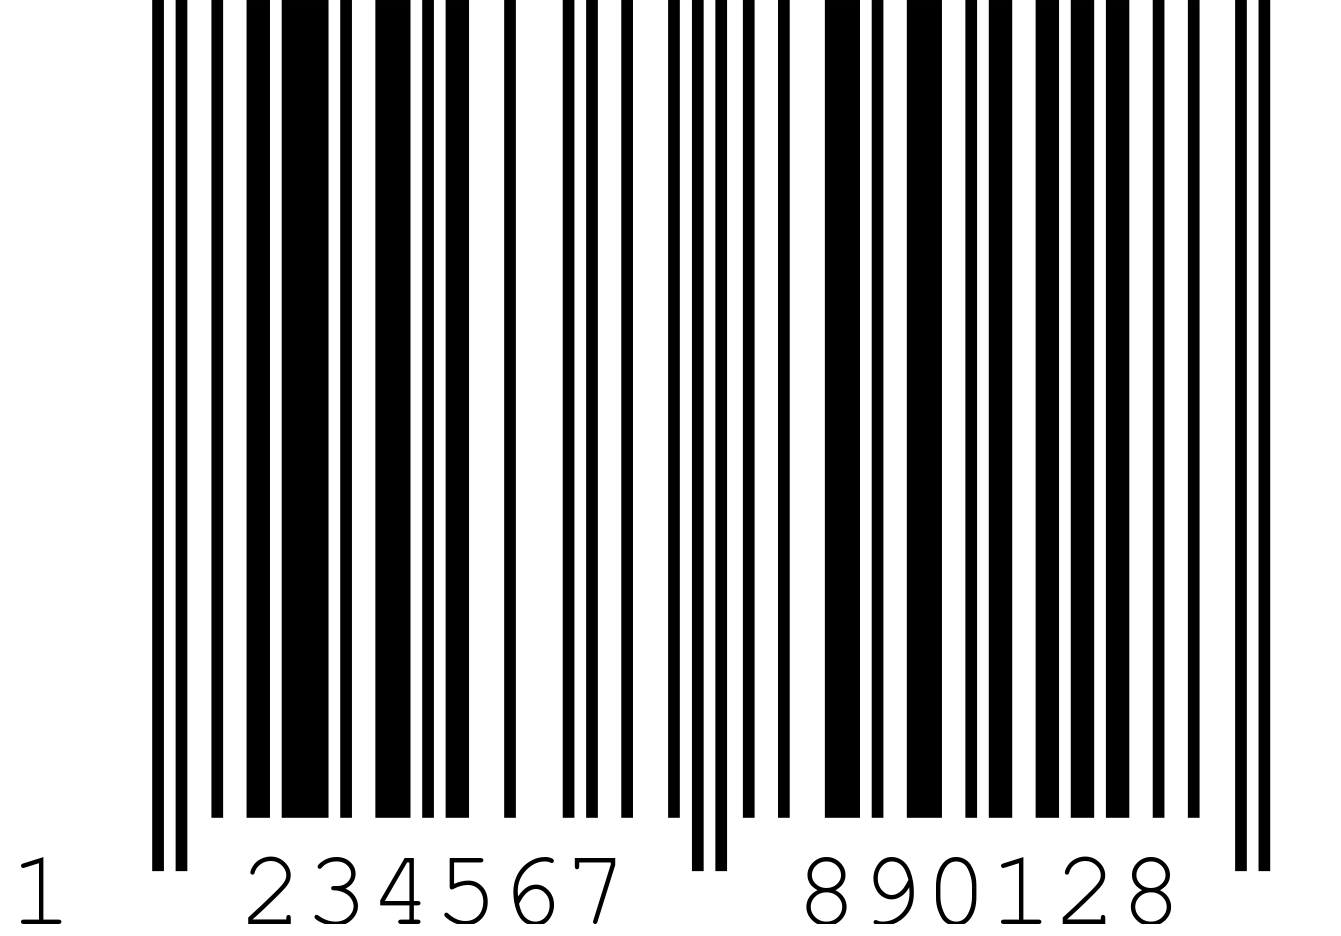 Etiqueta de precio Original / Códigos de Barras / ean-13